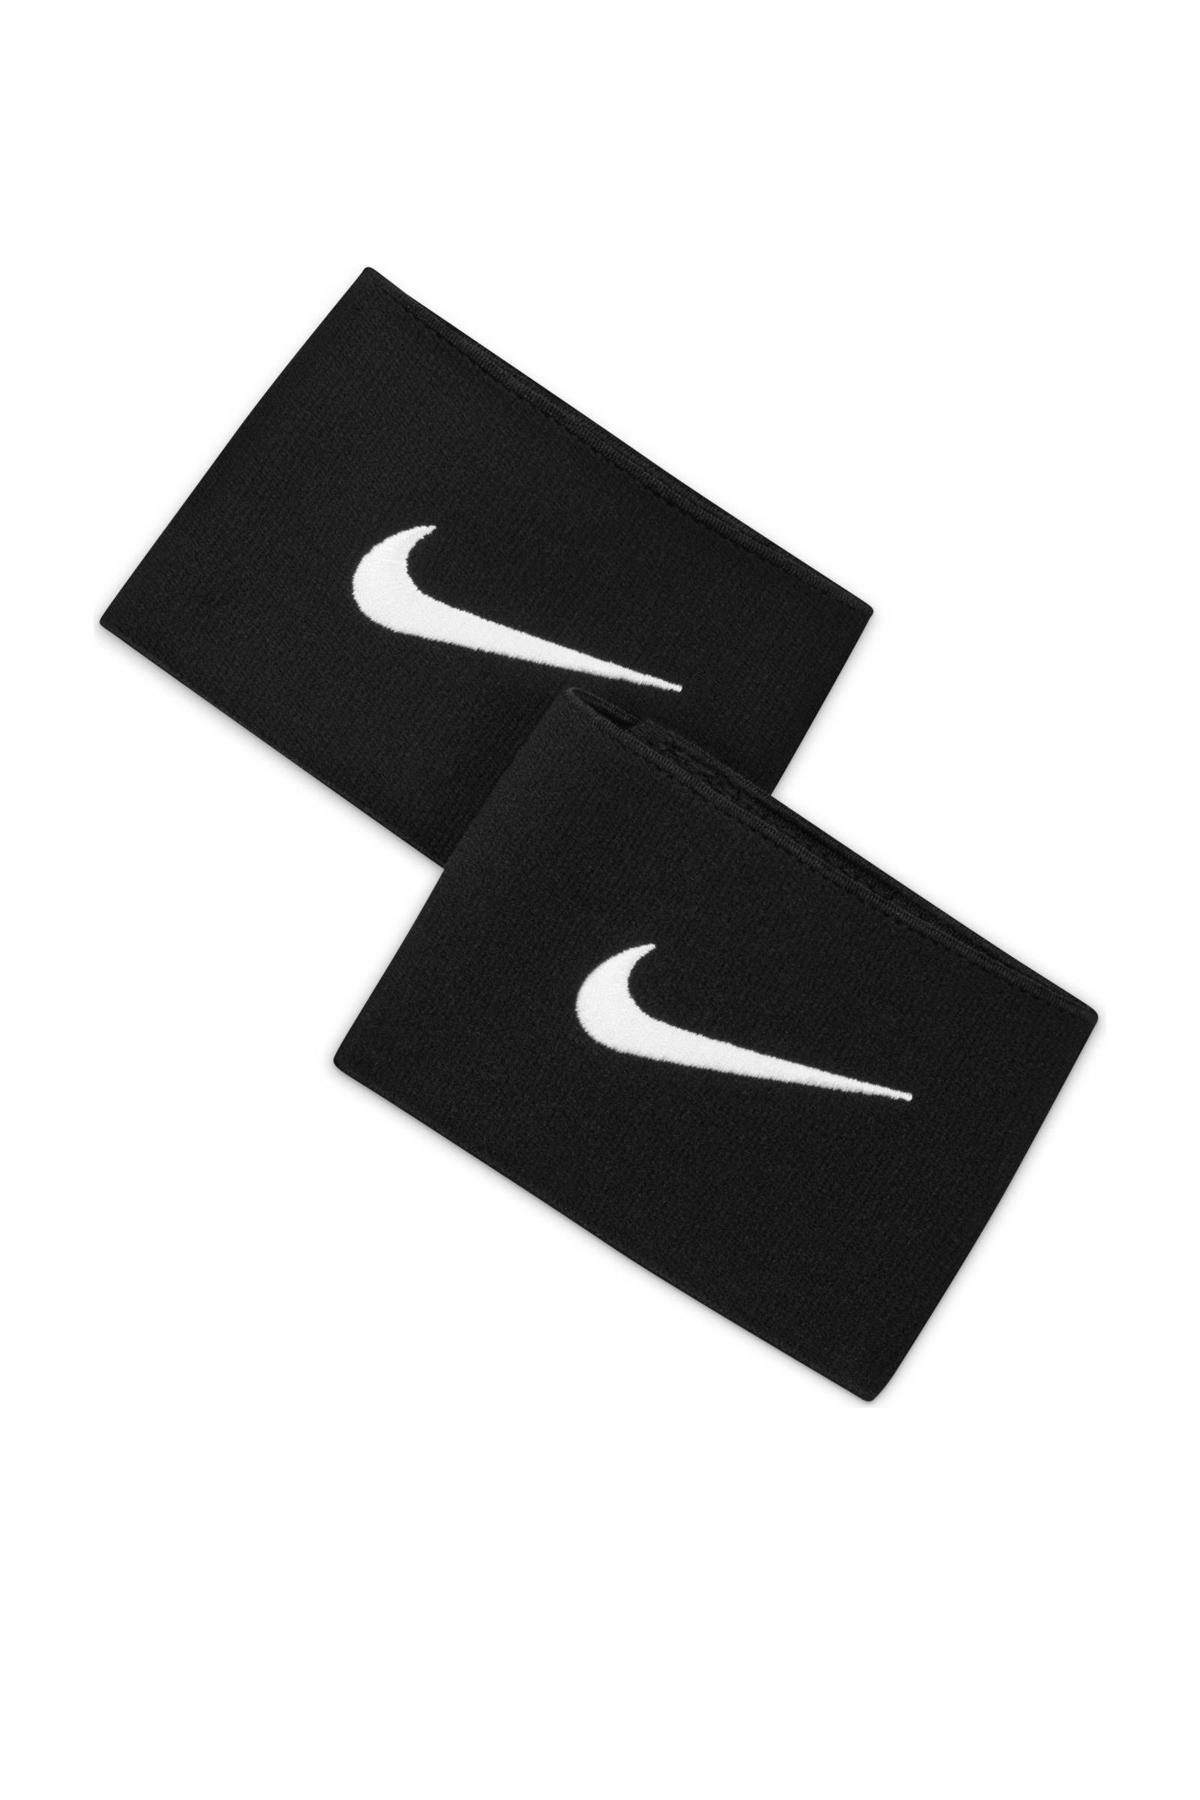 Ten einde raad Ass Interpretatief Nike scheenbeschermer ophouders Guard Stay II zwart | wehkamp